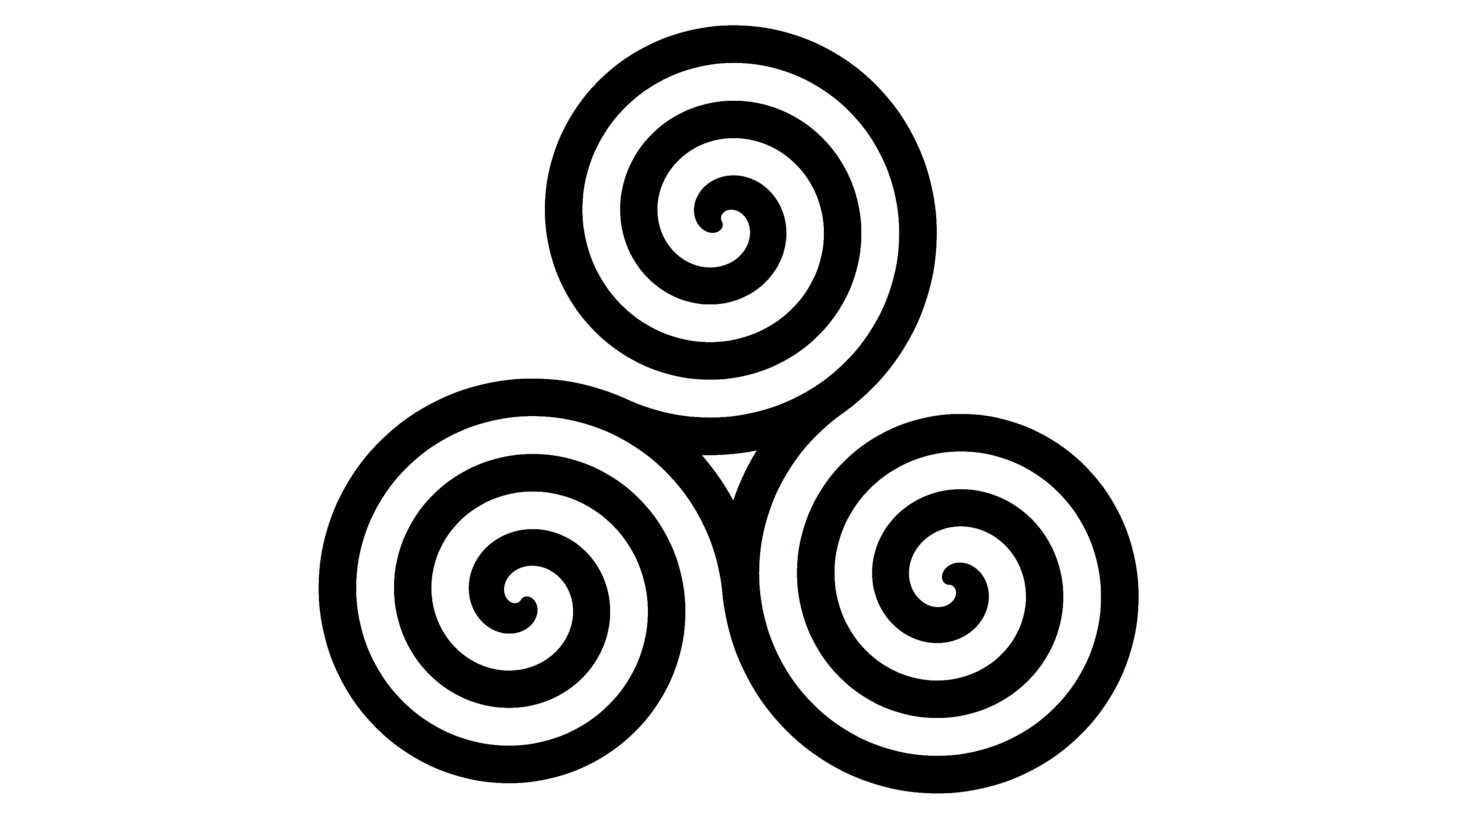 Celtic spiral logo